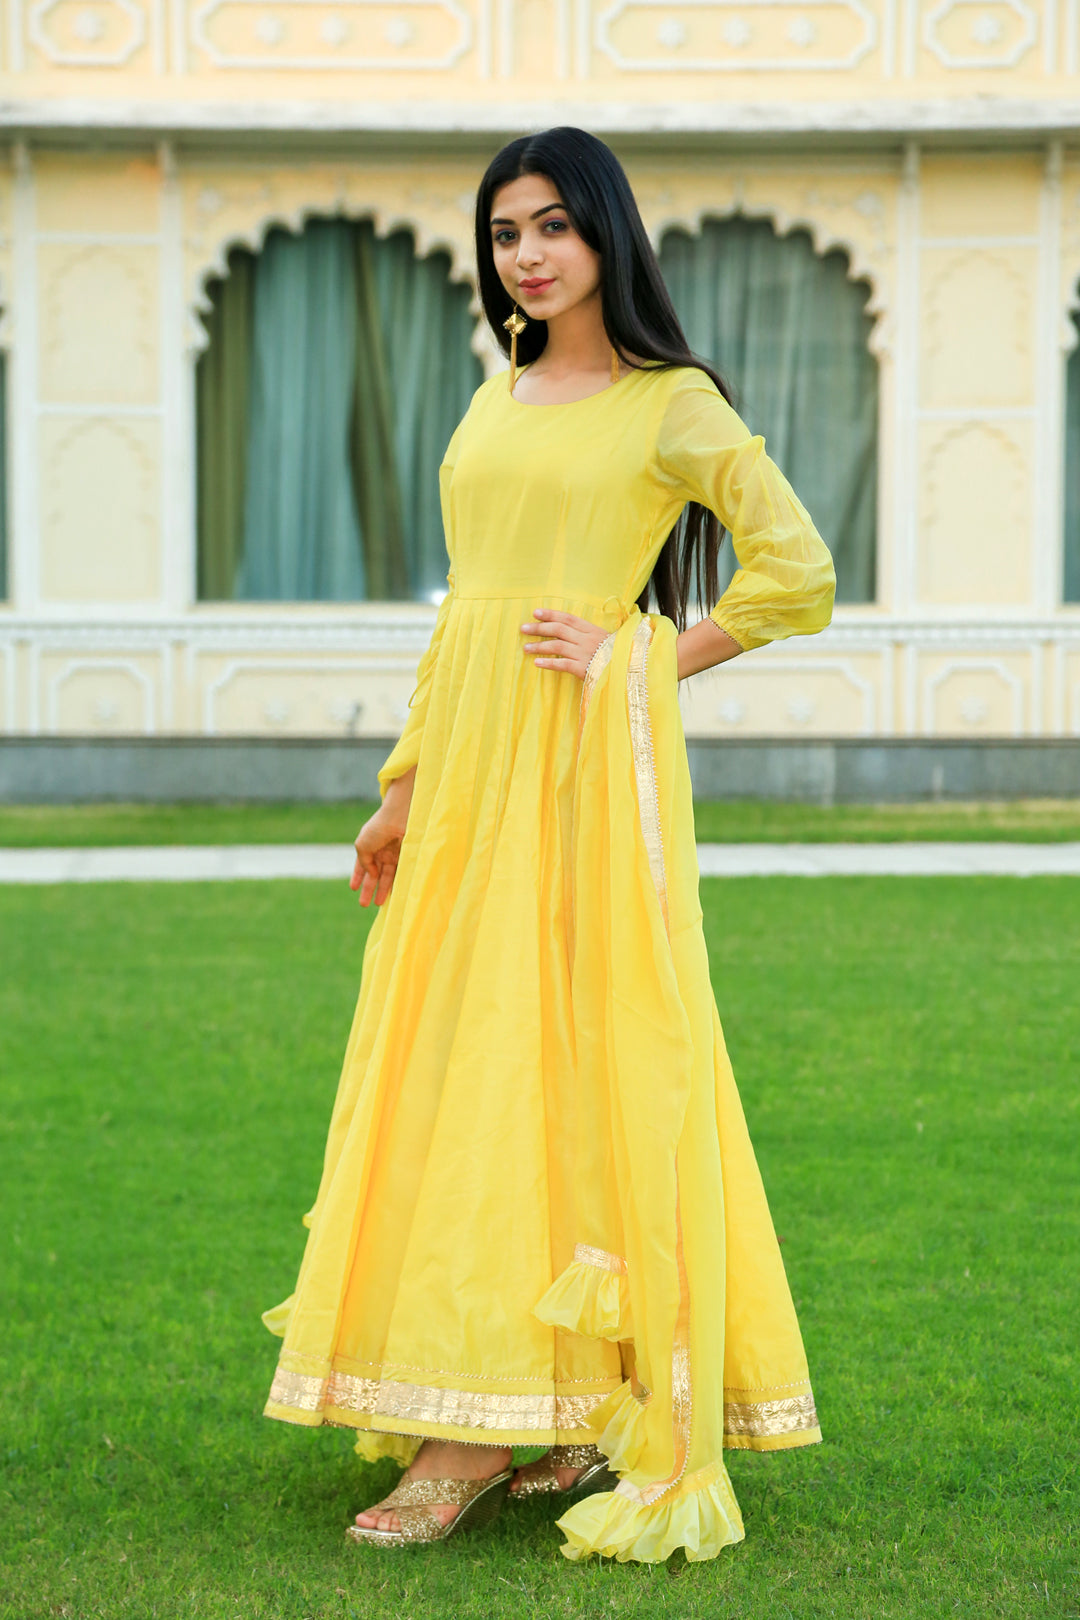 Pineapple Yellow Anarkali Dress With Dupatta – Indianvirasat